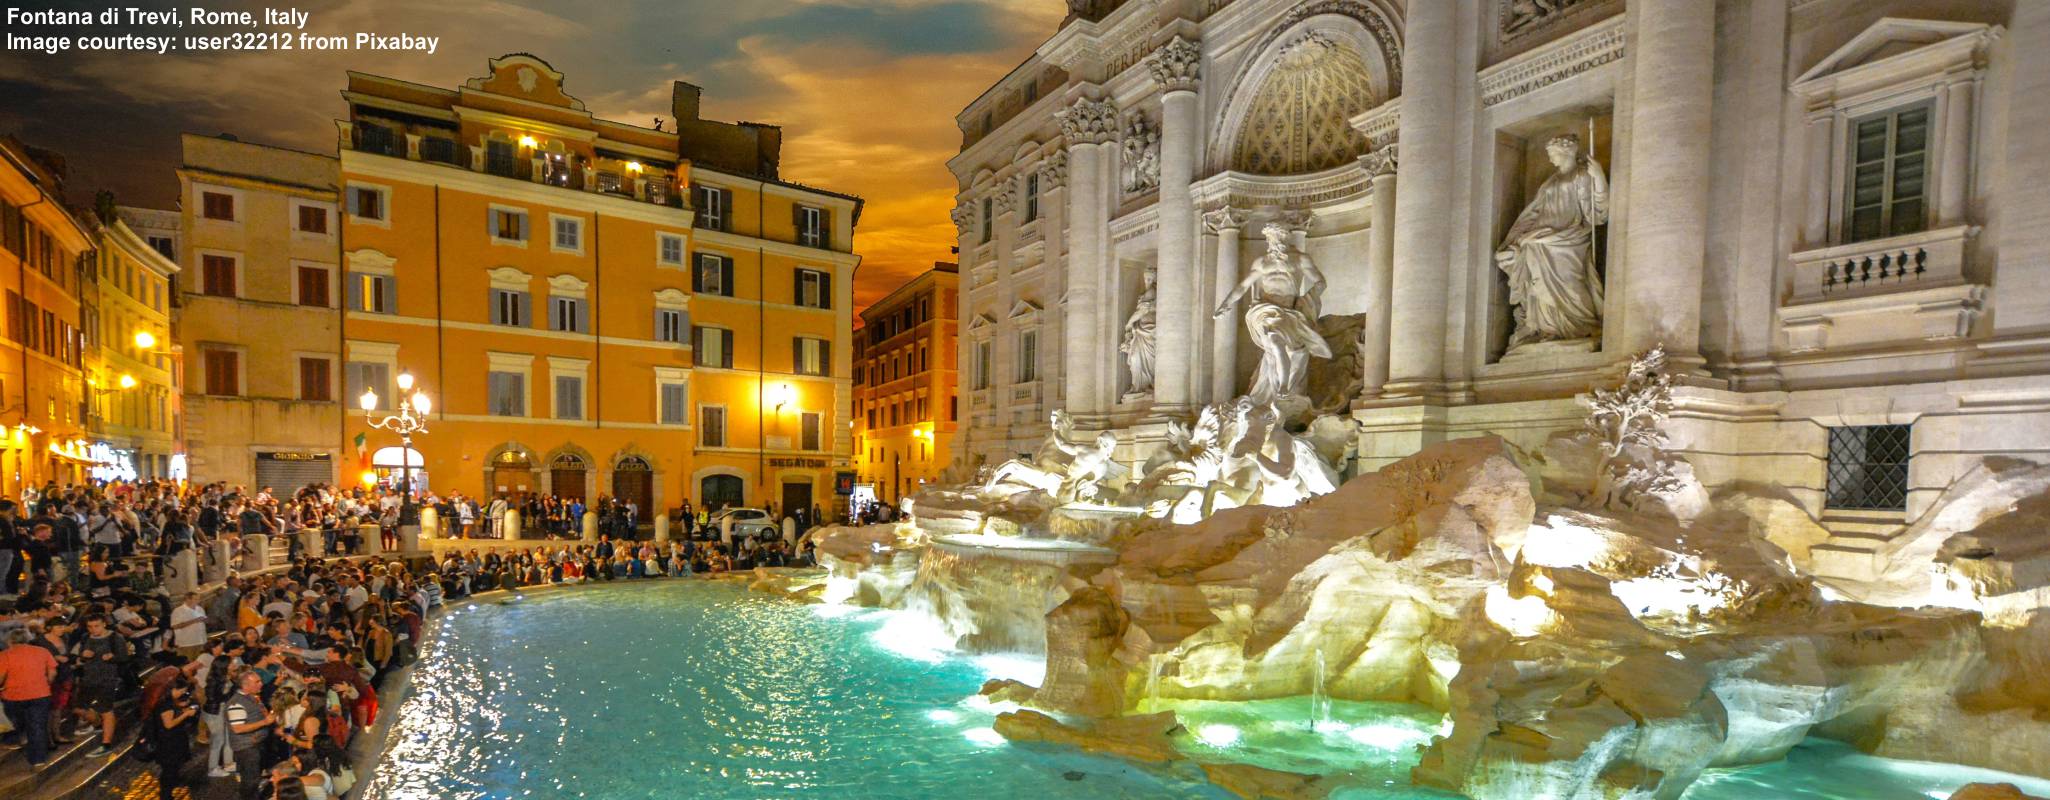 Fontana di Trevi - Trevi Fountain image